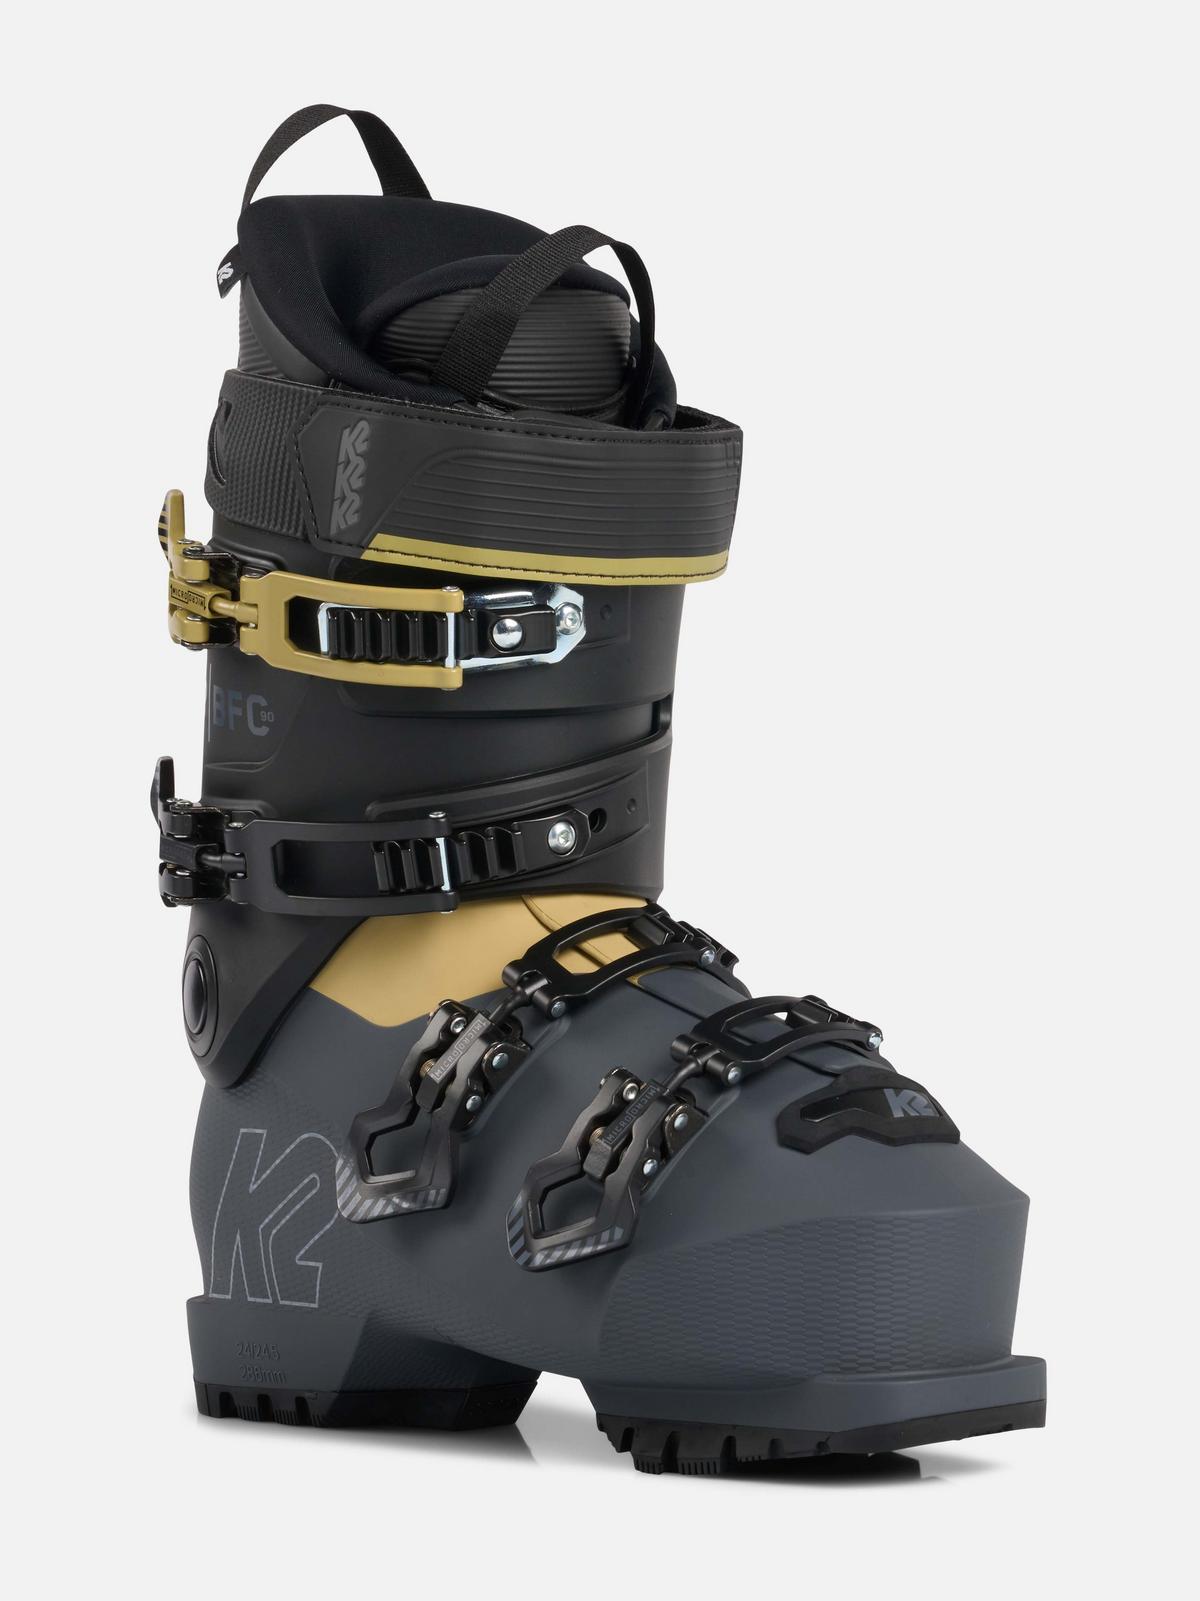 Kostuums Conserveermiddel evenwicht B.F.C. 90 Ski Boots | K2 Skis and K2 Snowboarding